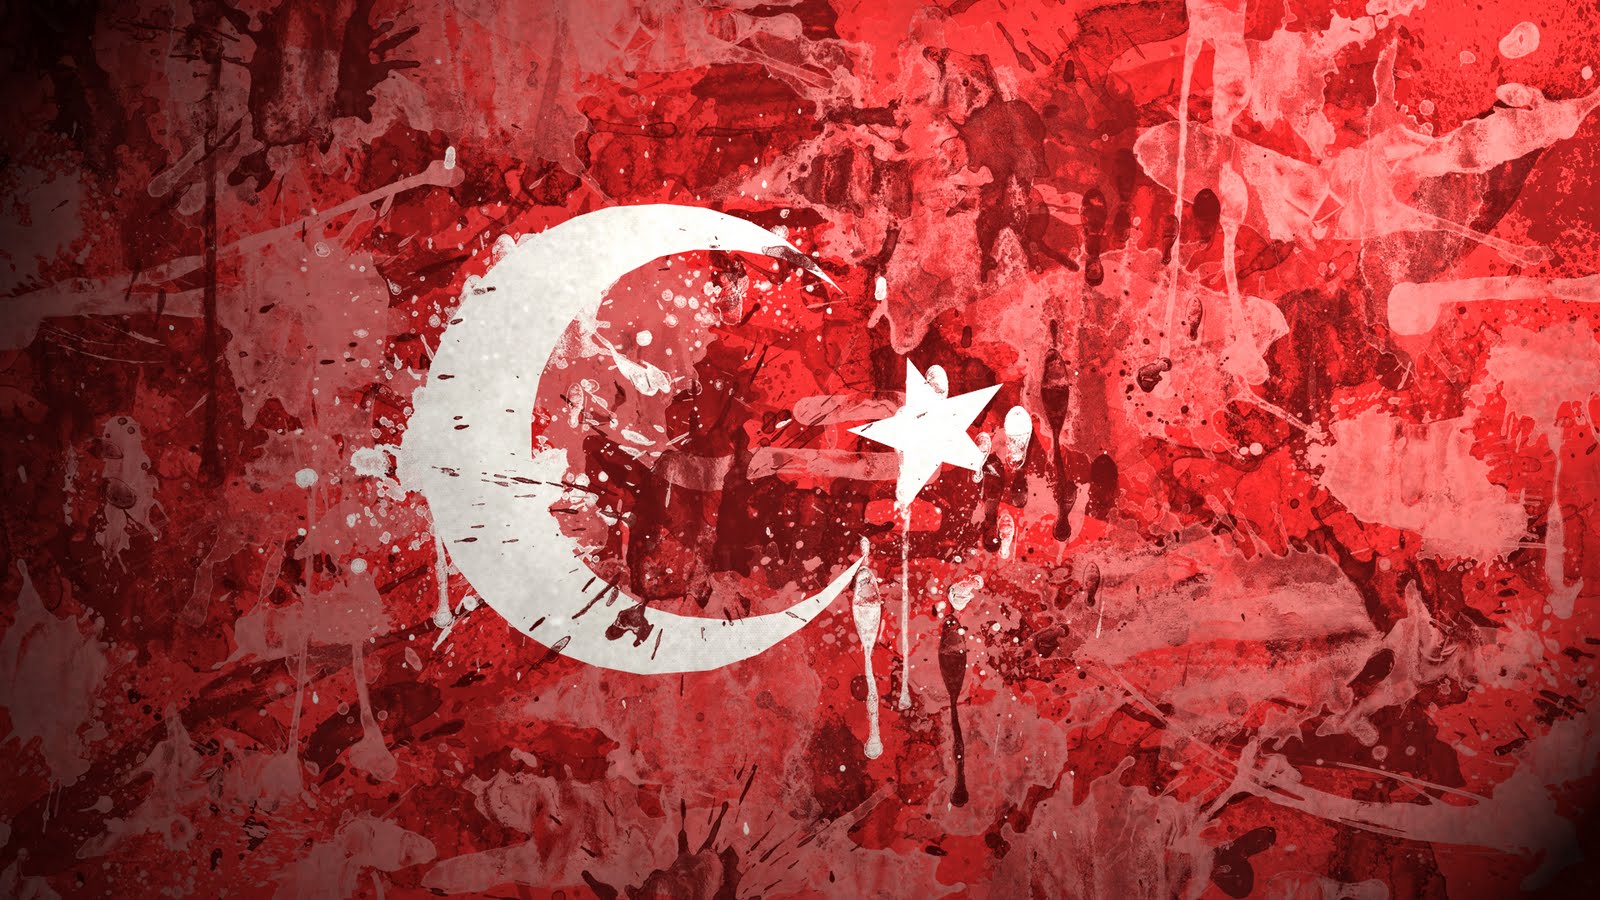 türk wallpaper,red,maroon,graphic design,illustration,art